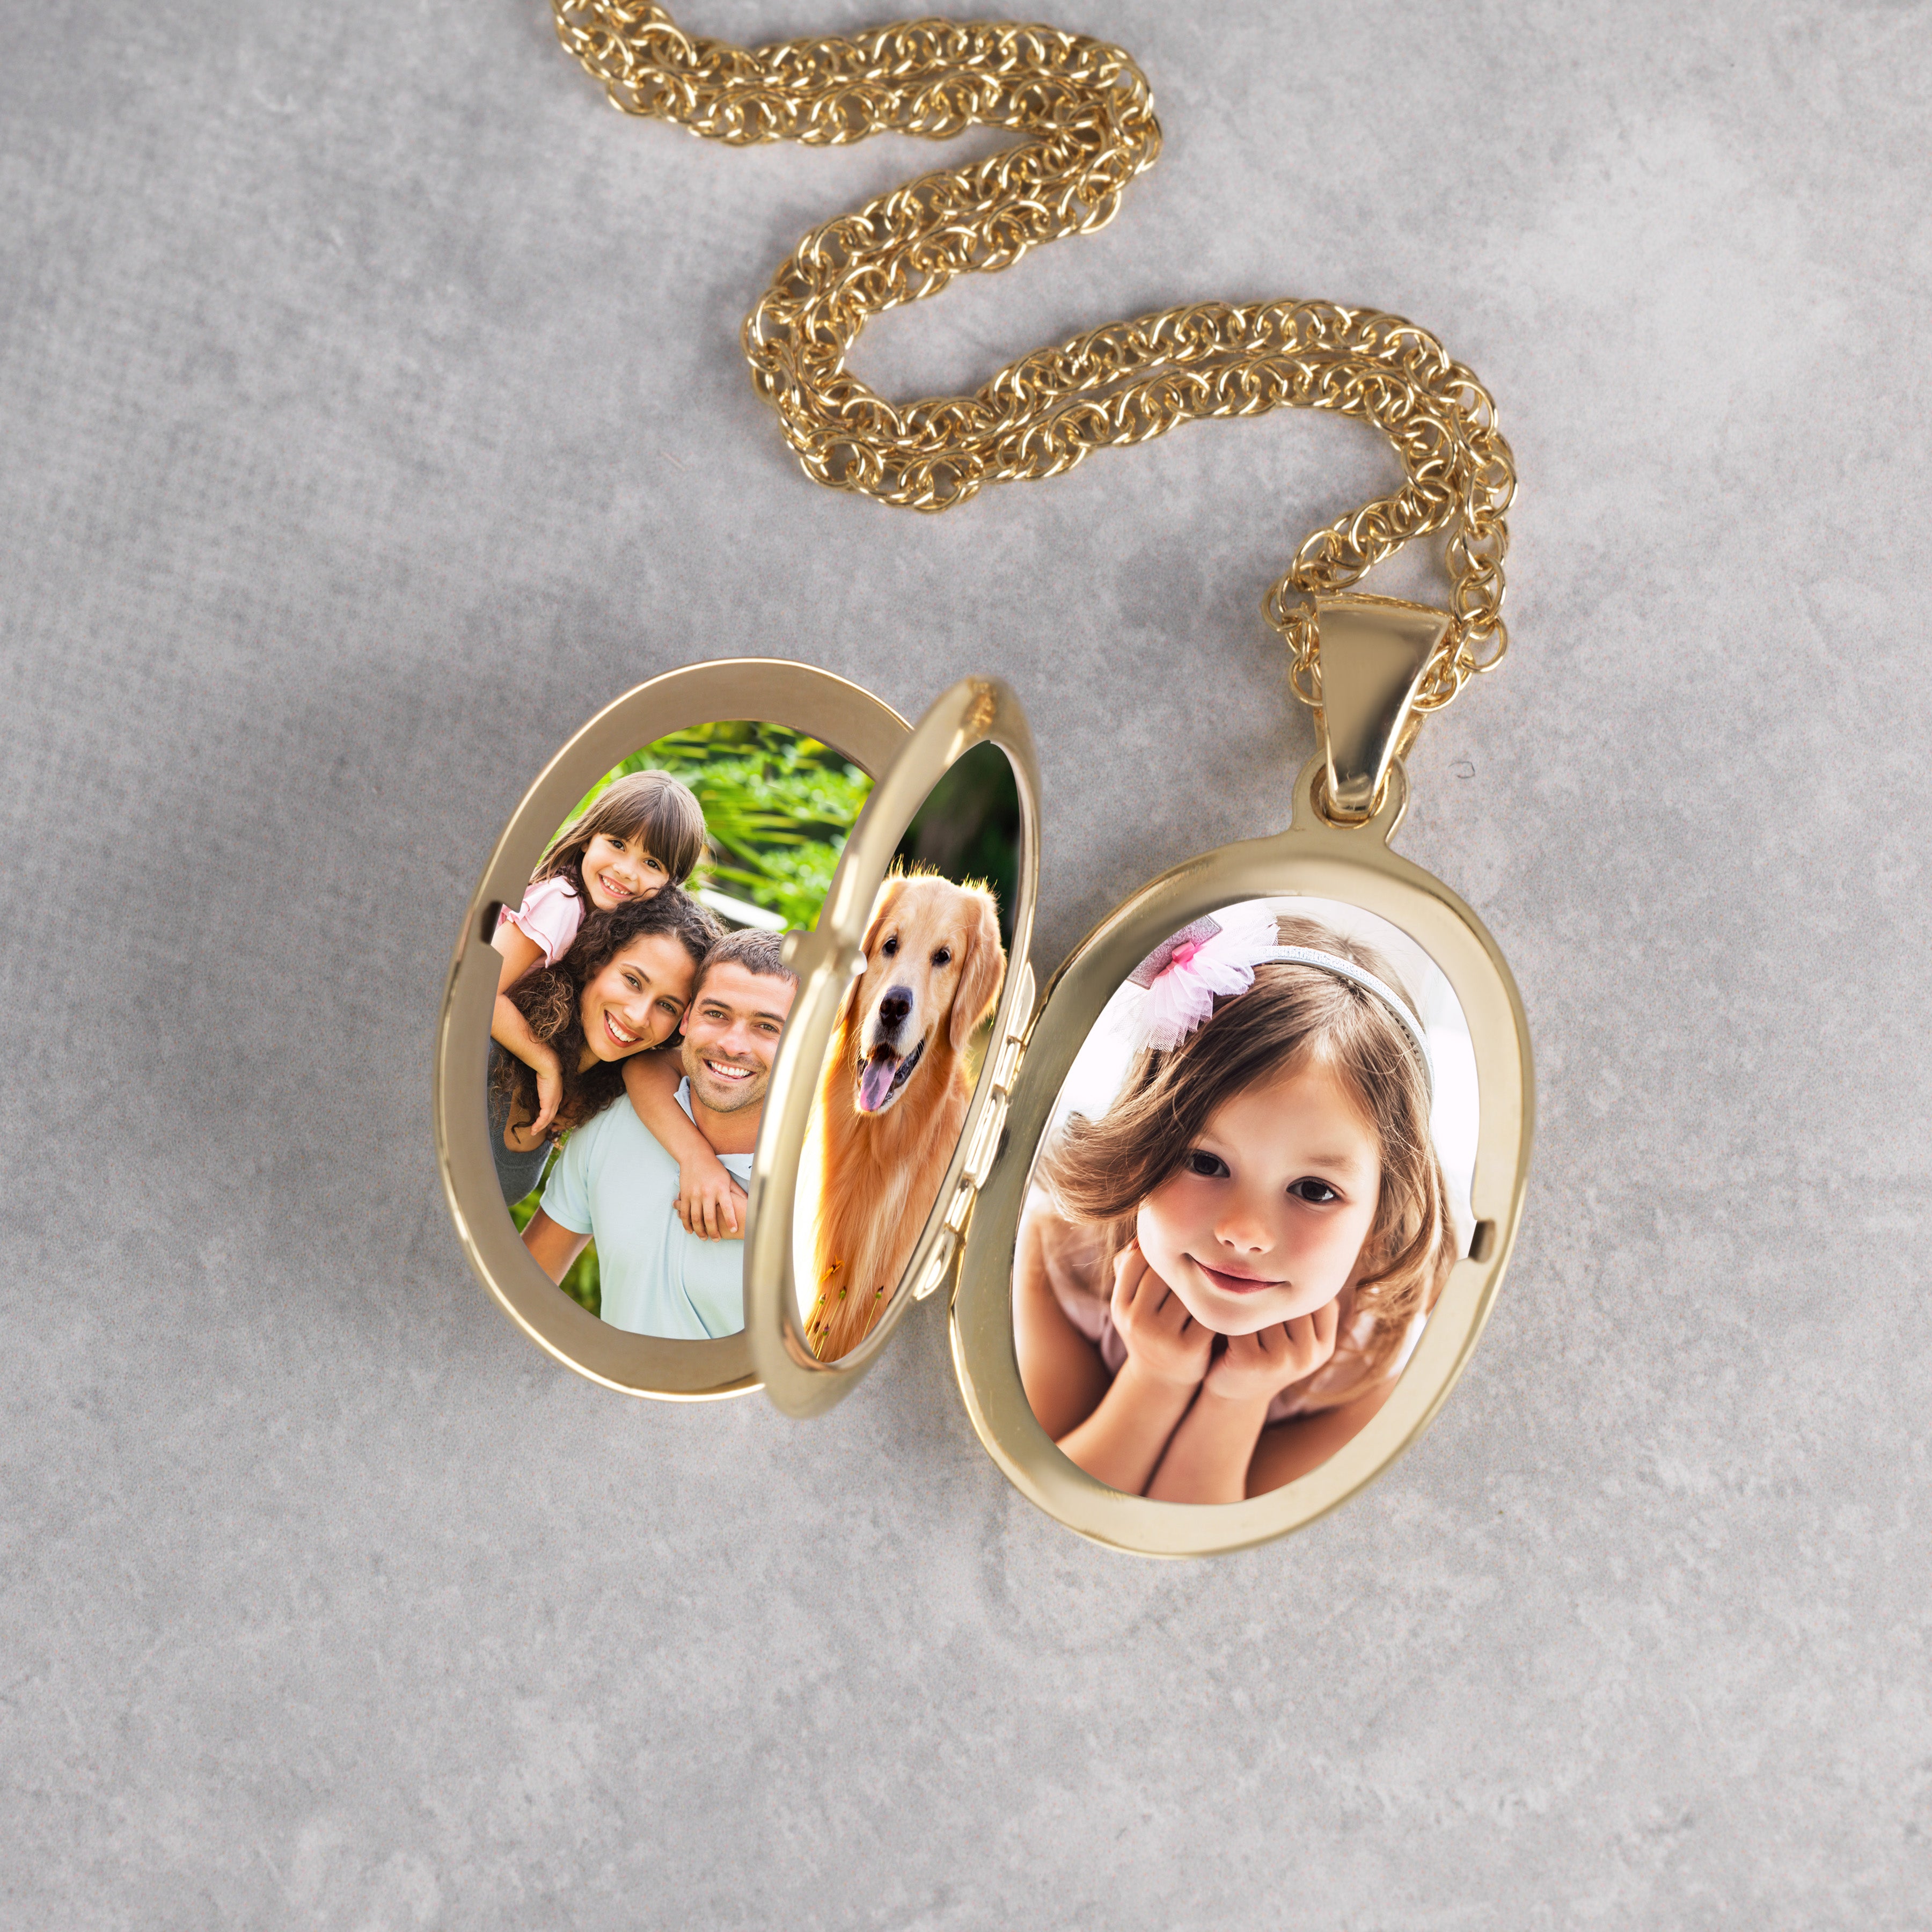 photos inside 9ct gold locket necklace